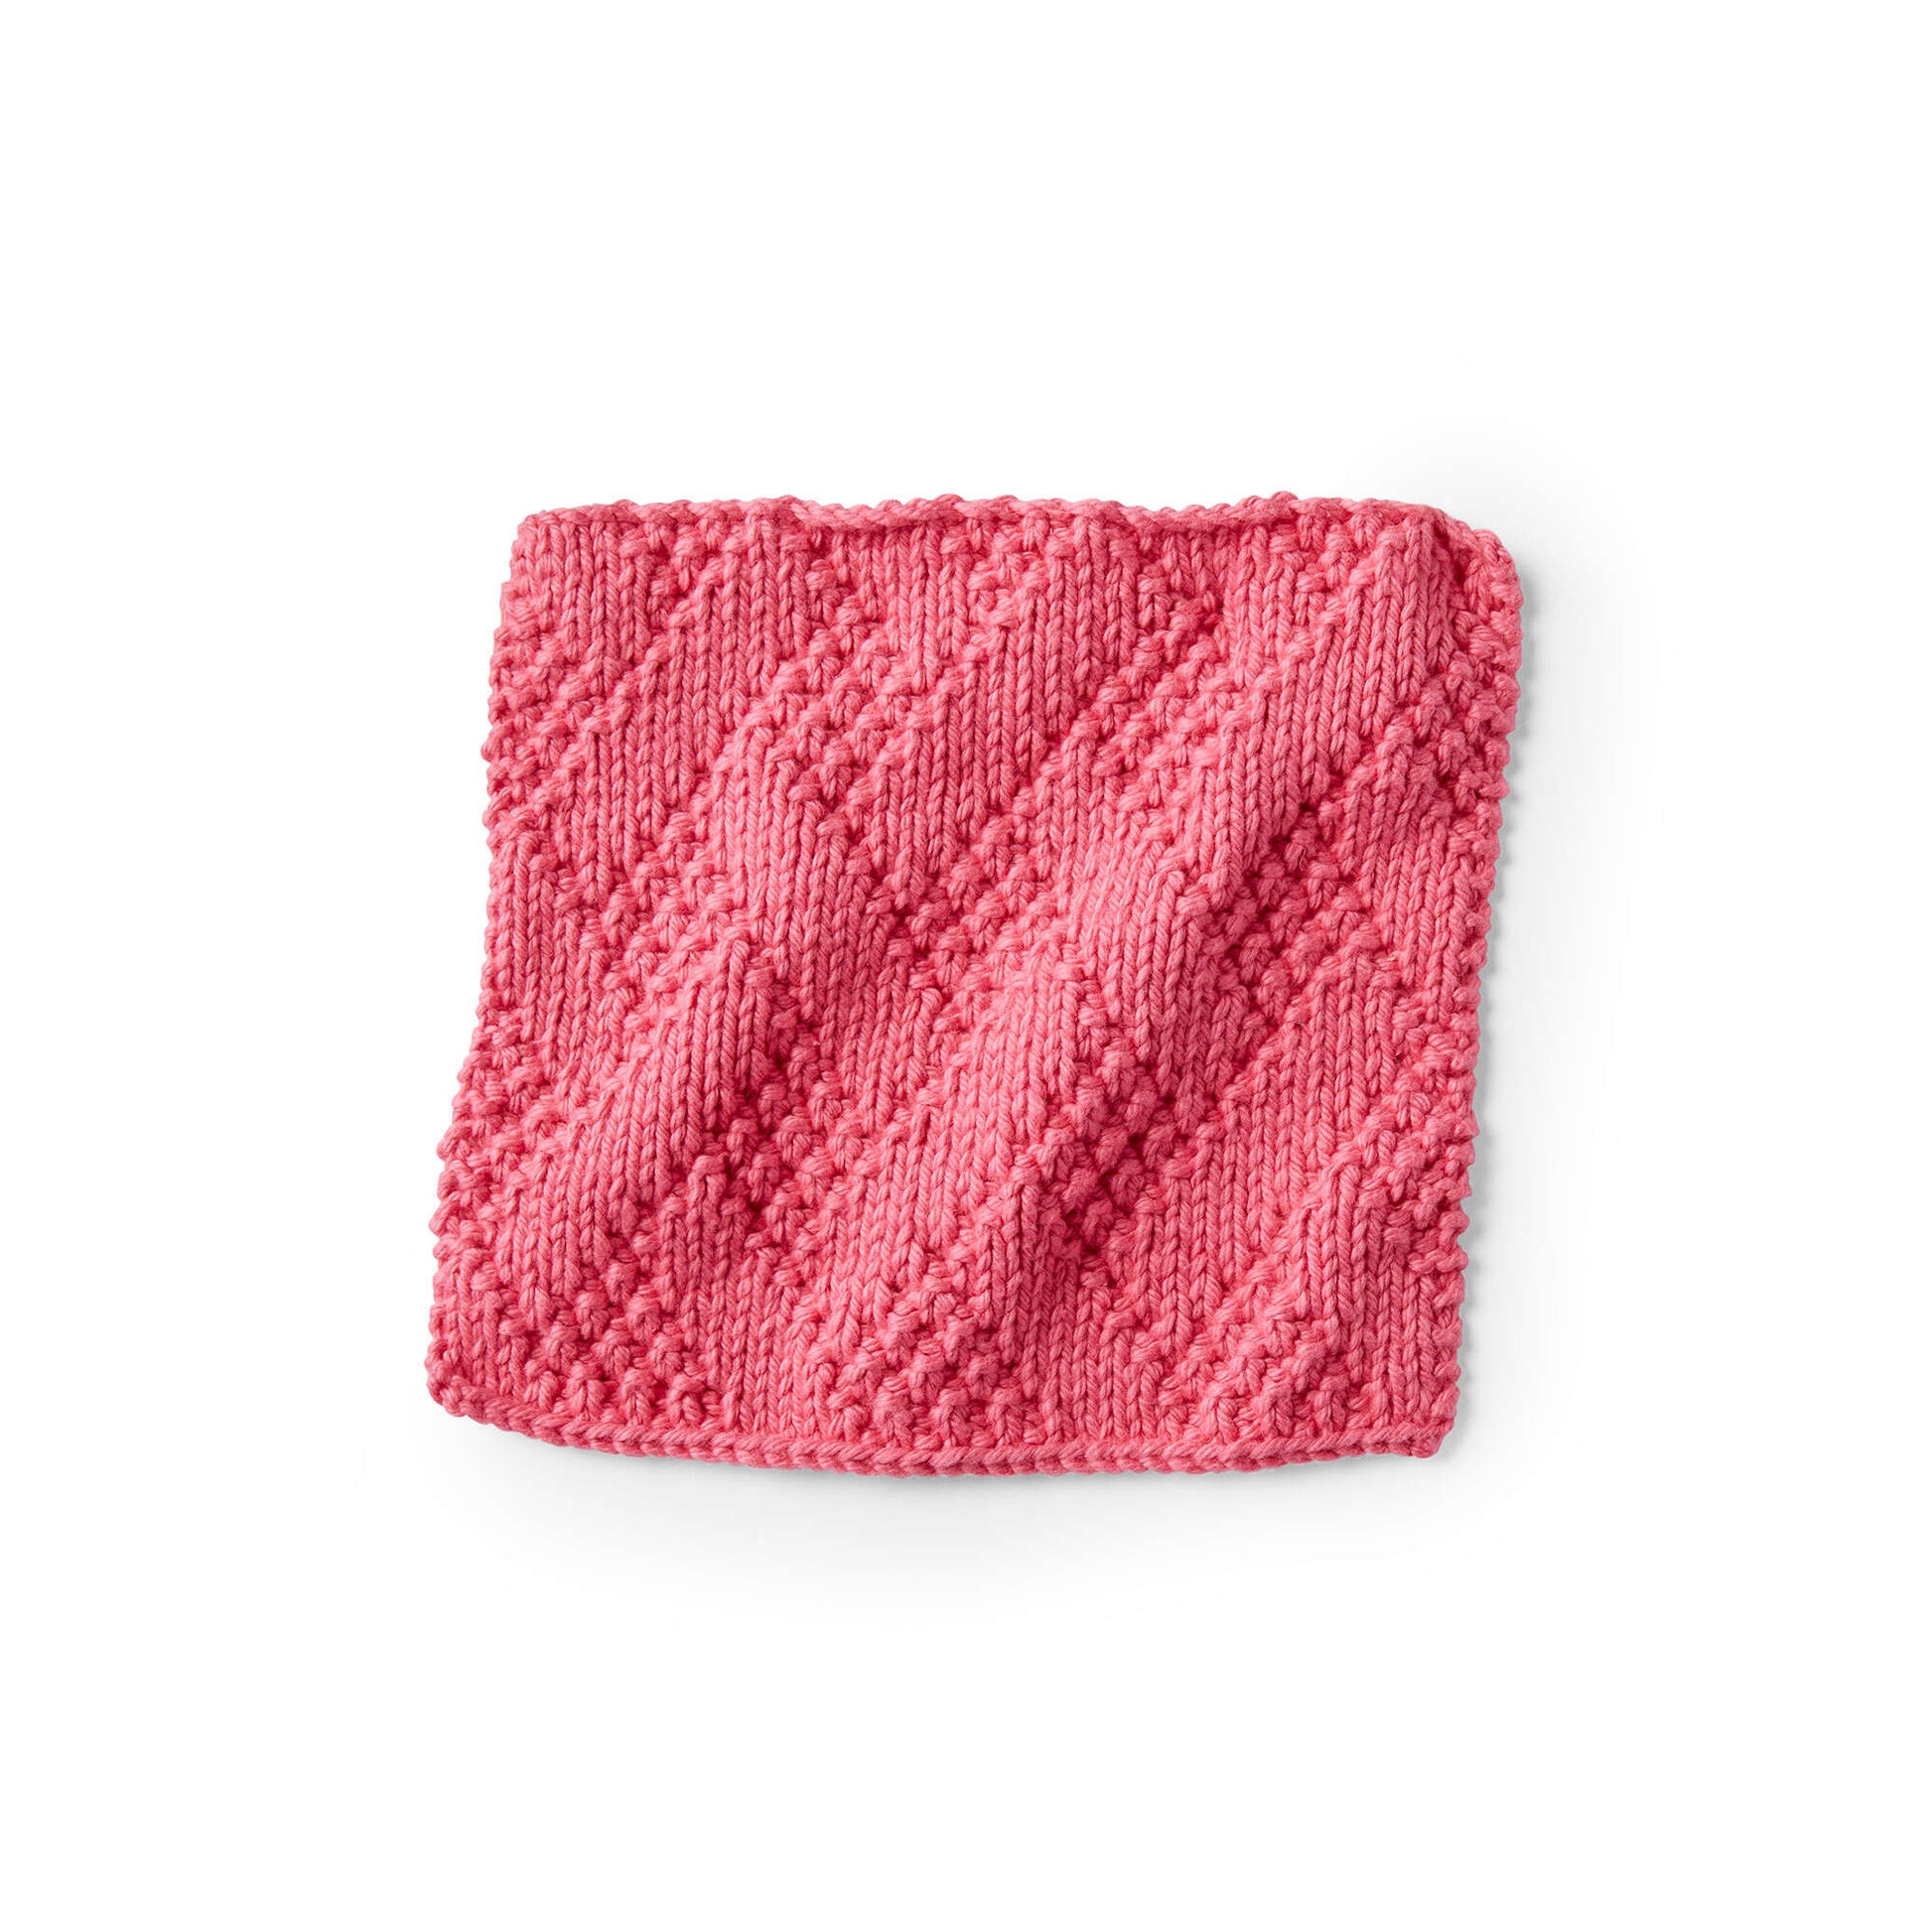 Free Red Heart Knit Chevron Dishcloth Pattern